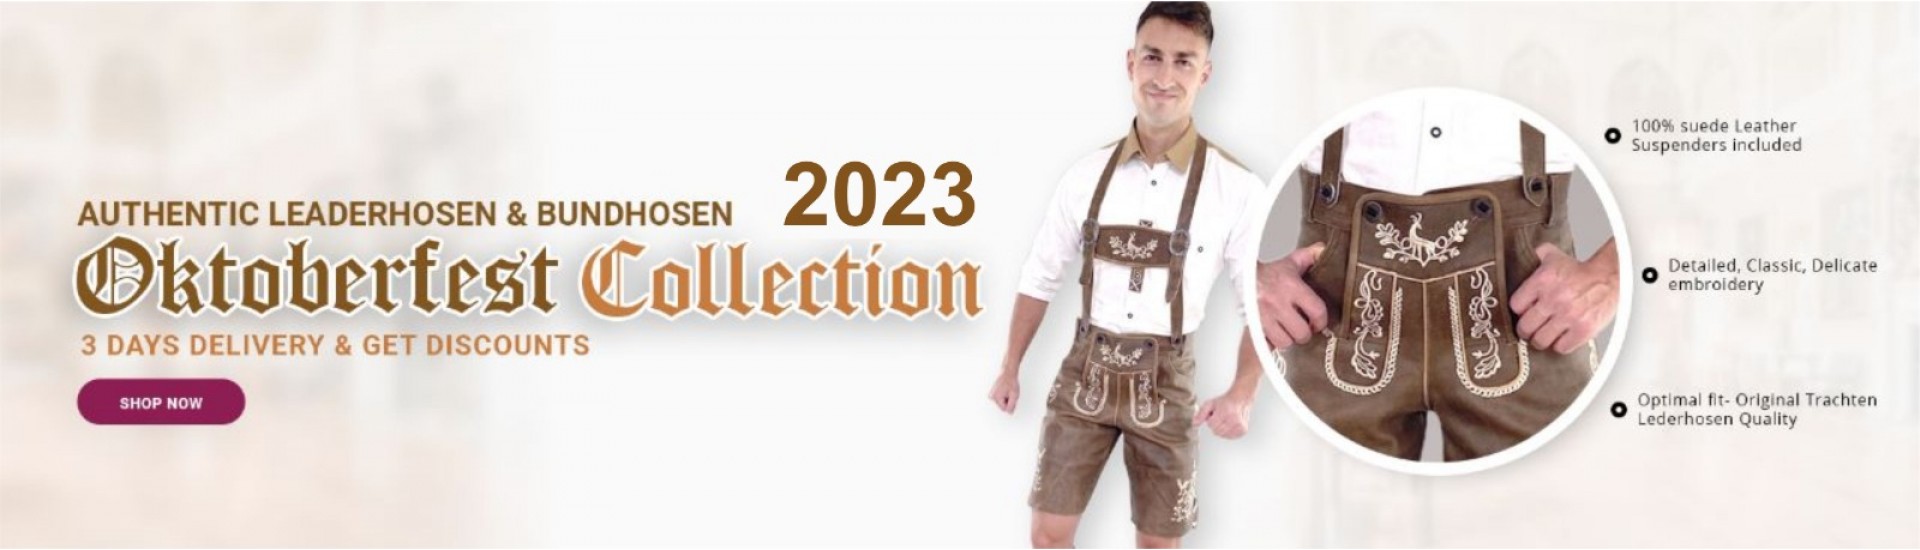 Oktoberfest Collection 2021 Lederhosen